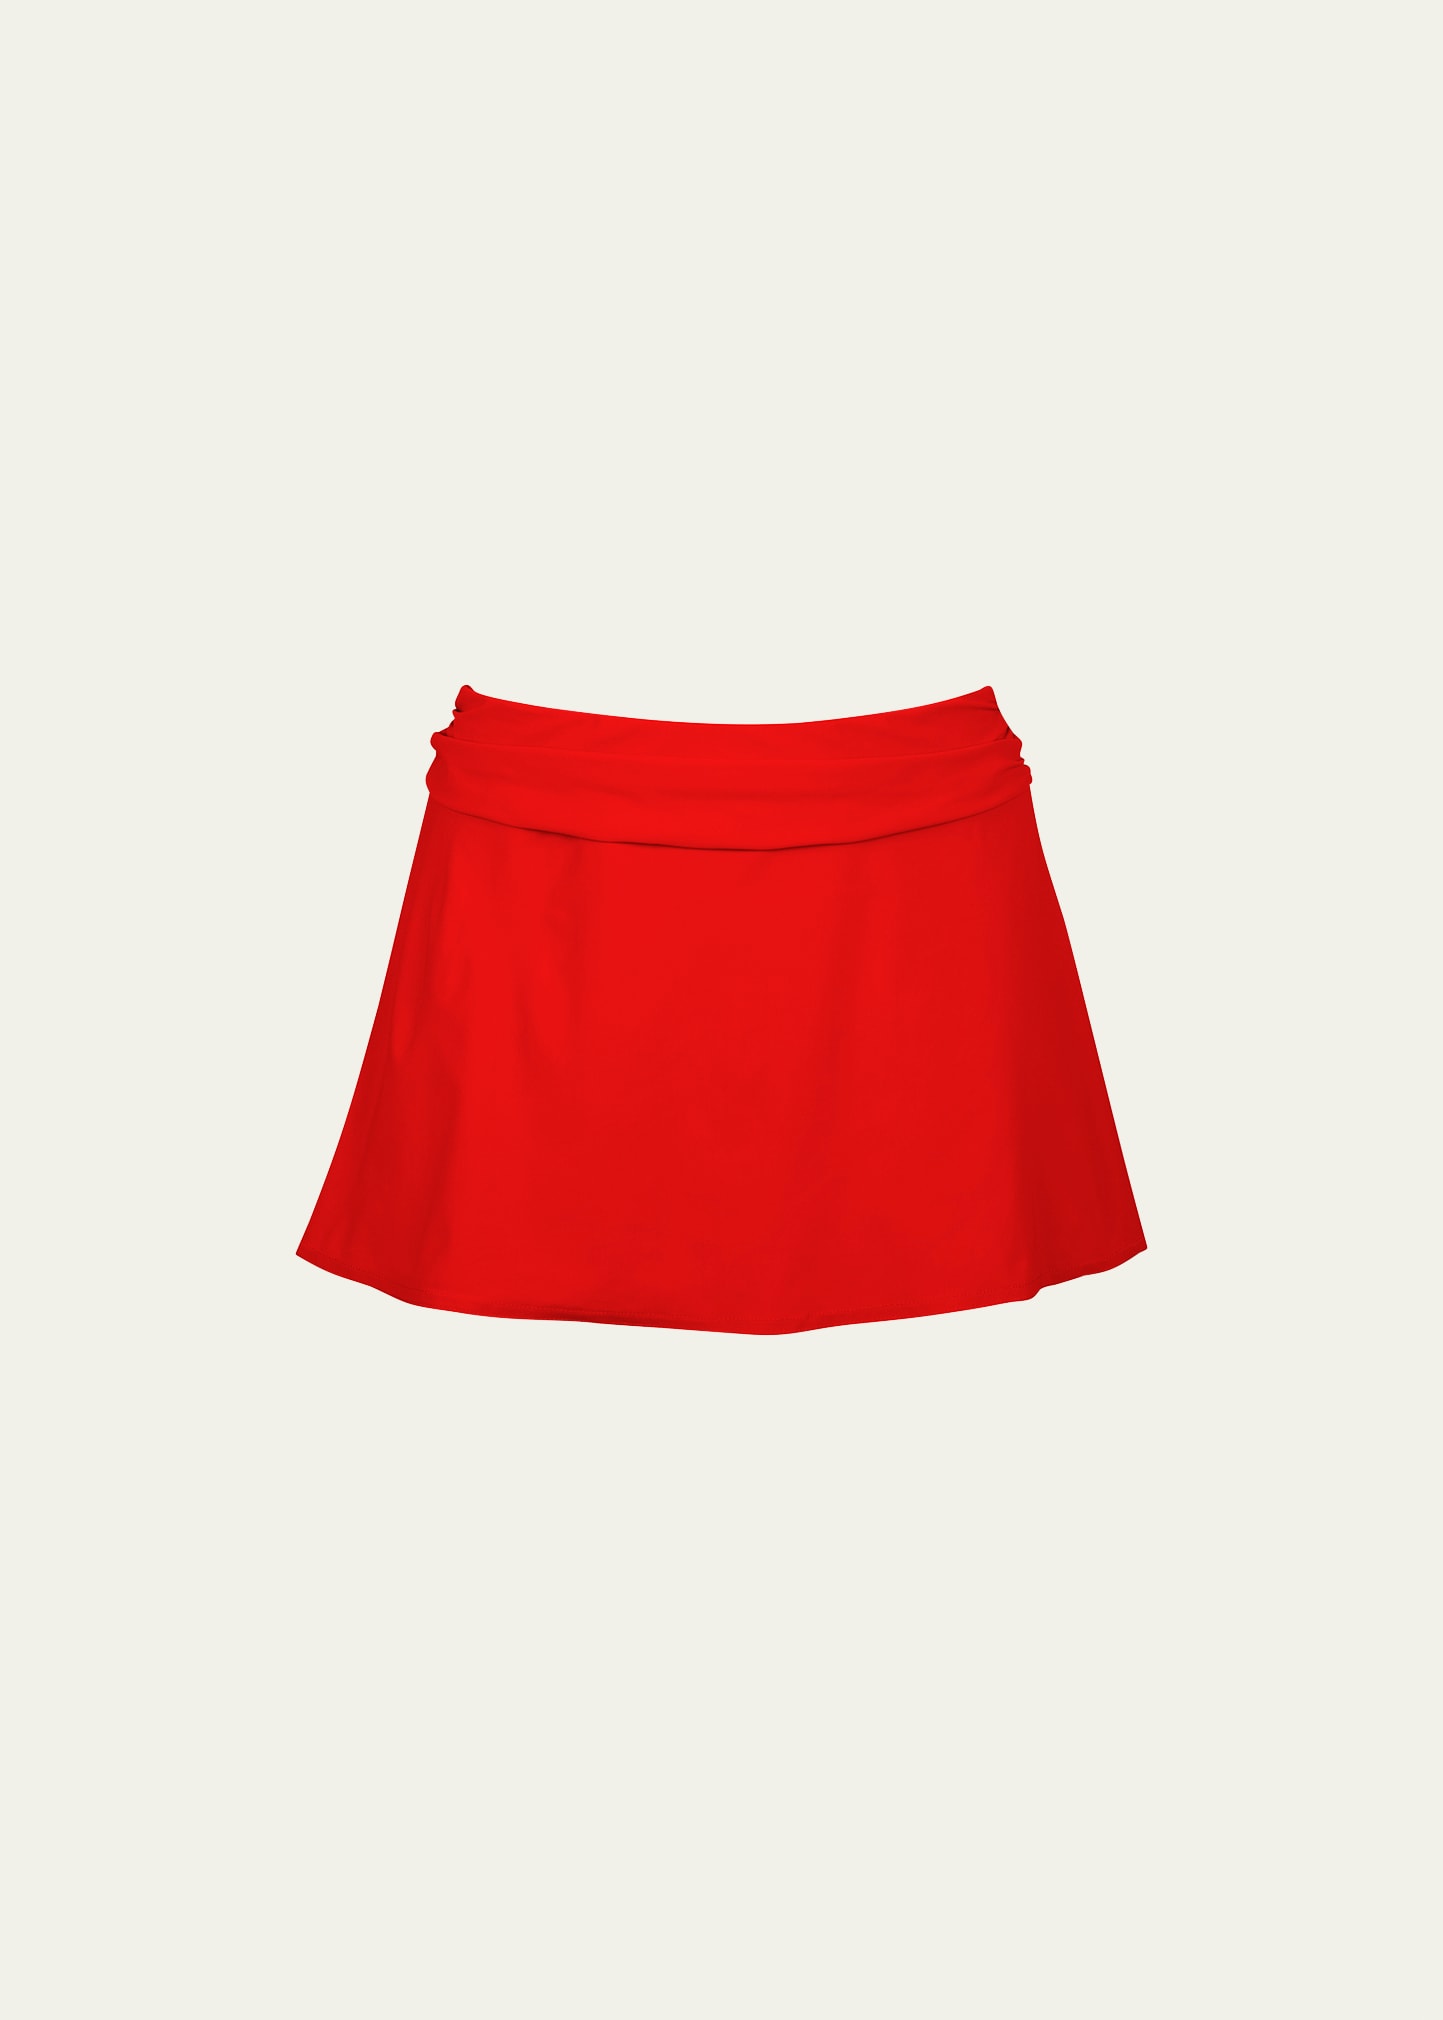 Karla Colletto Banded Multi-purpose Mini Skirt In Red